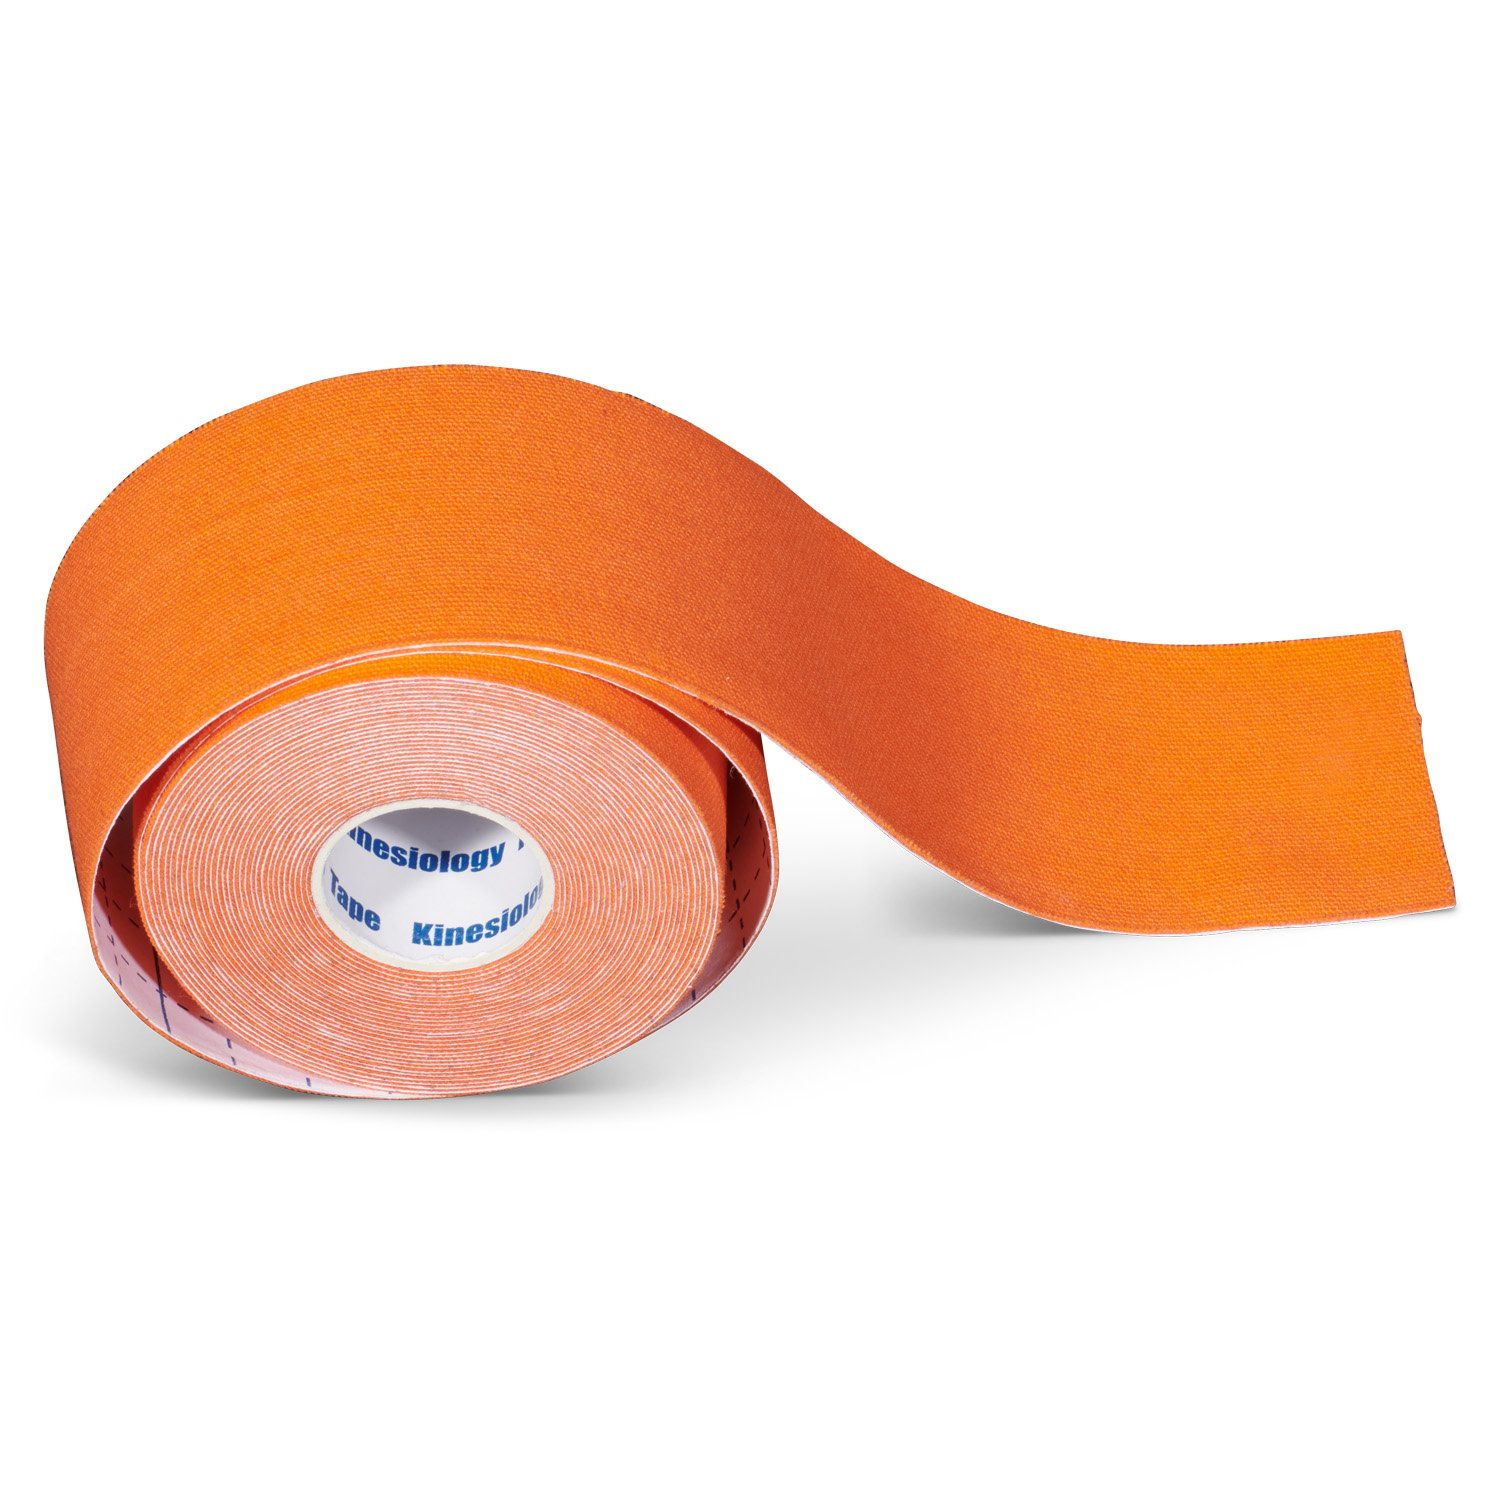 kinesiology tape 4 rolls plus 1 roll for free orange